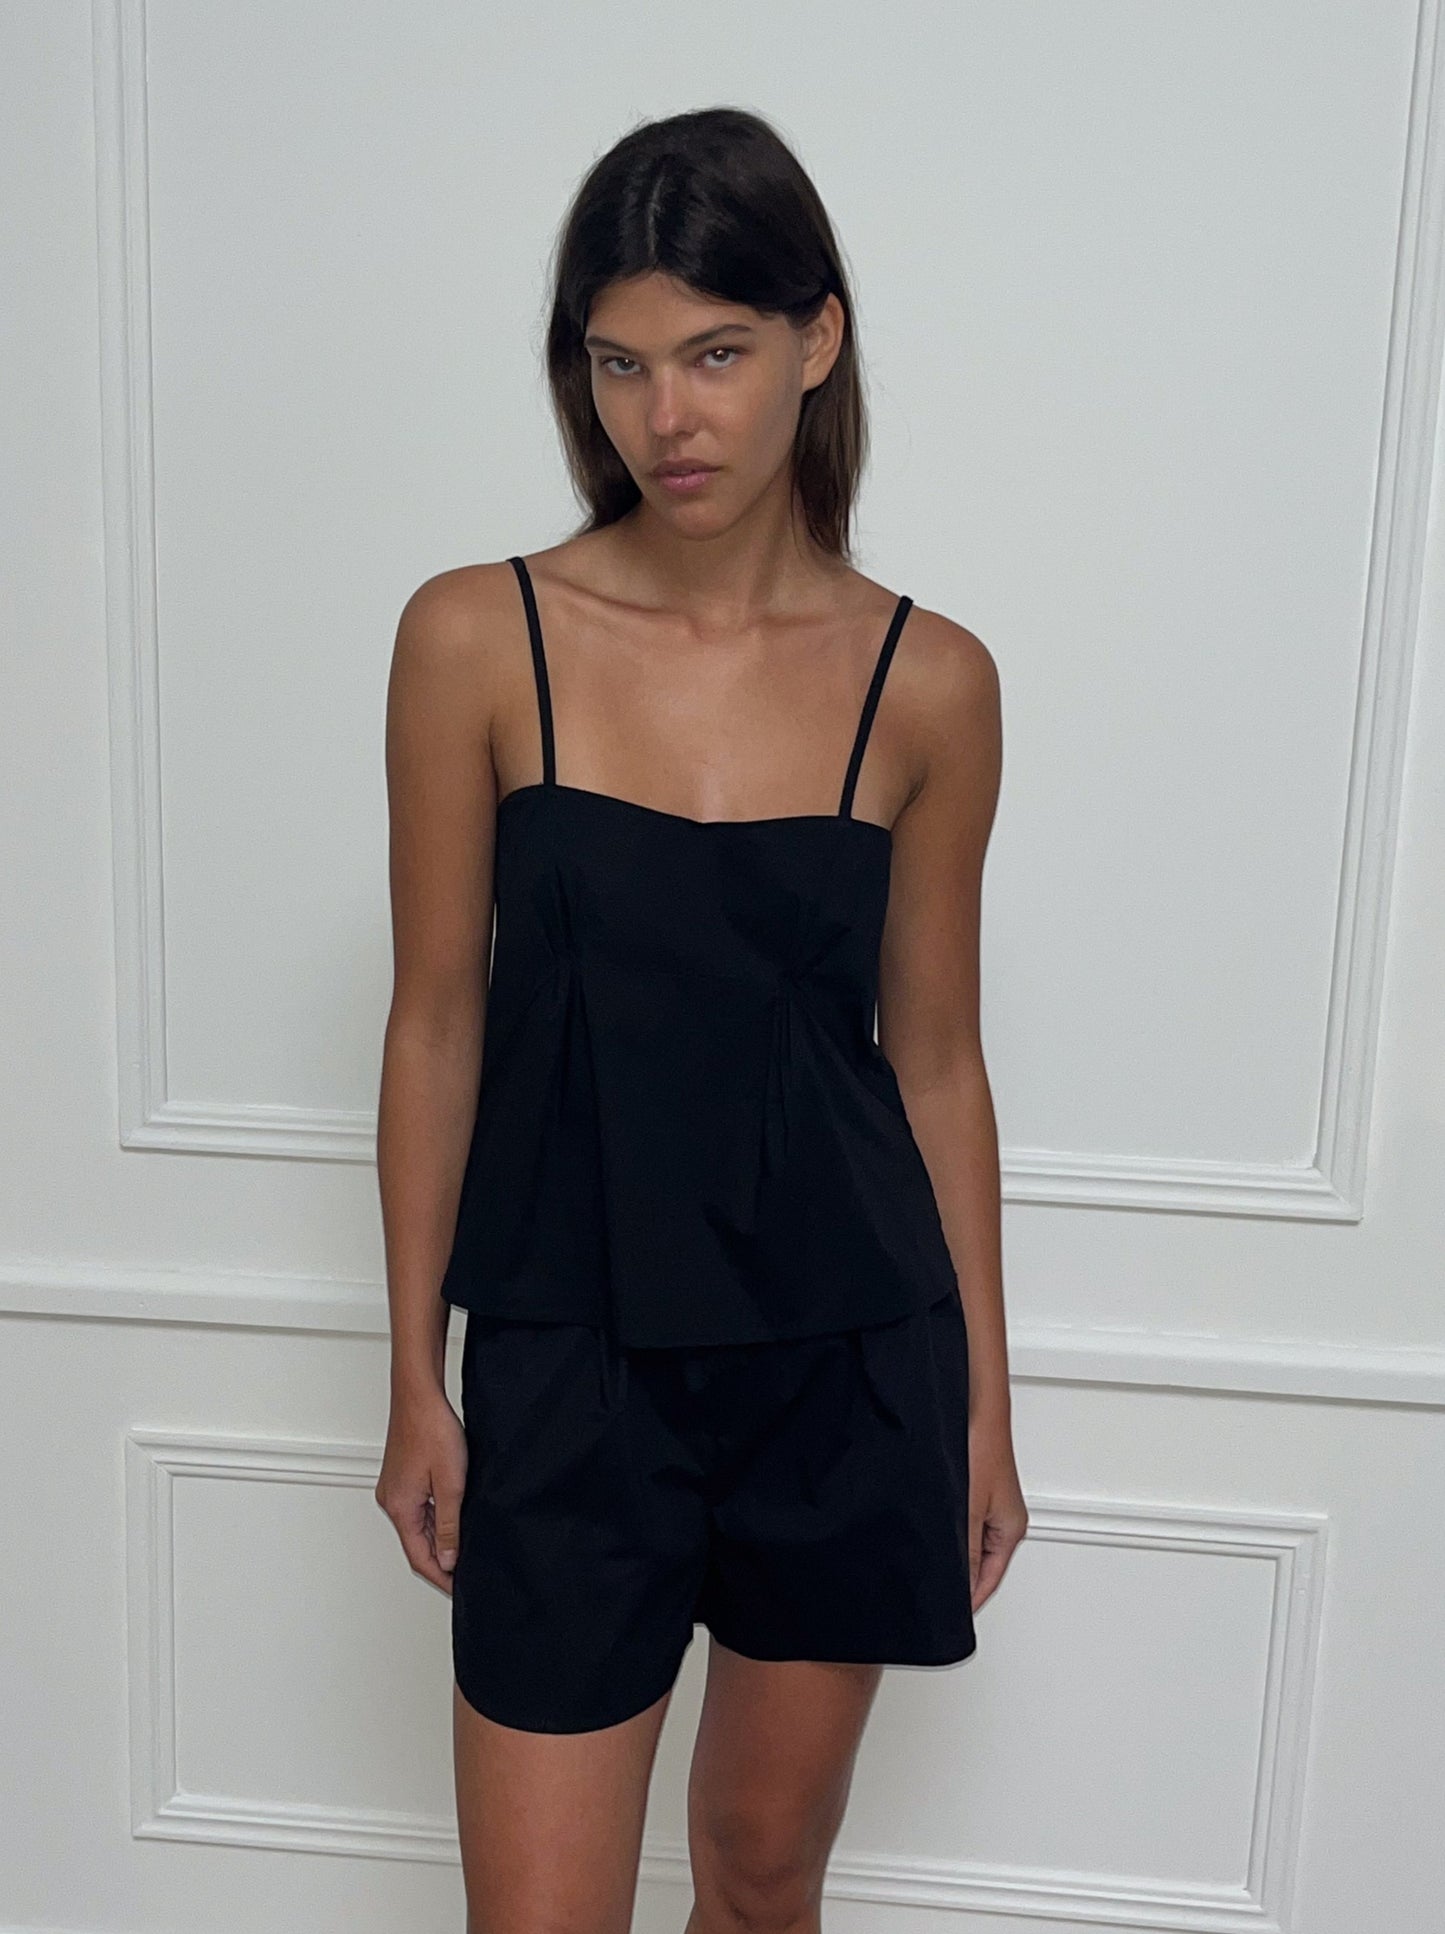 Female model wearing Pleat Top - Black by Deiji Studios against plain background